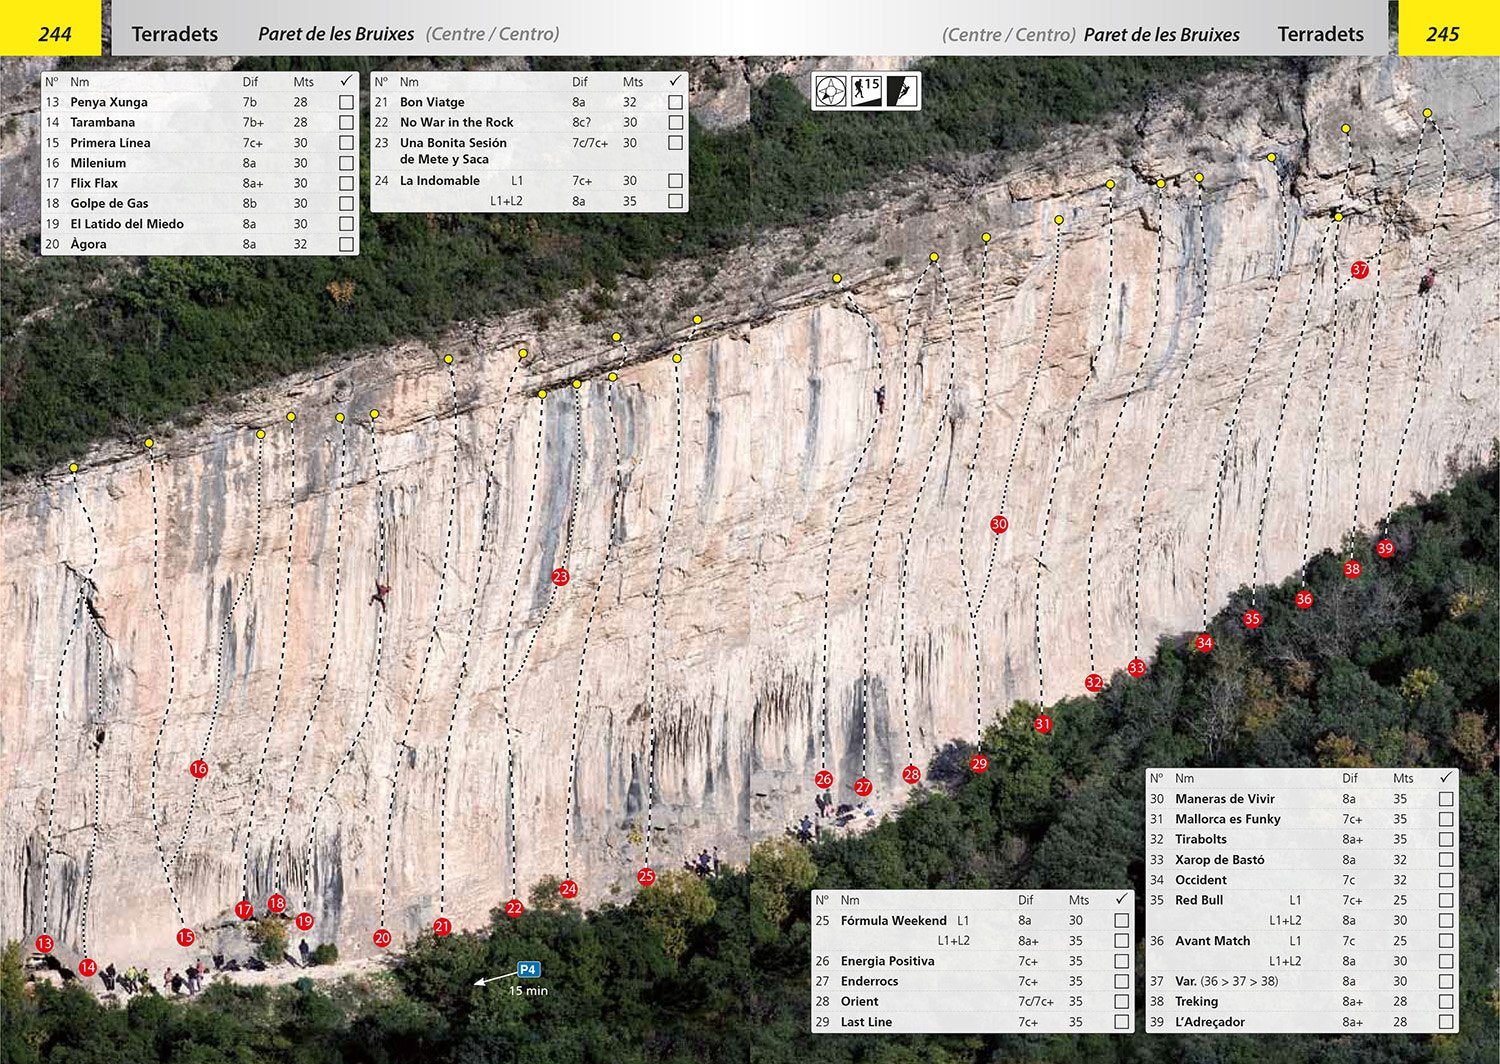 Lleida Climbs (2019), guidebook